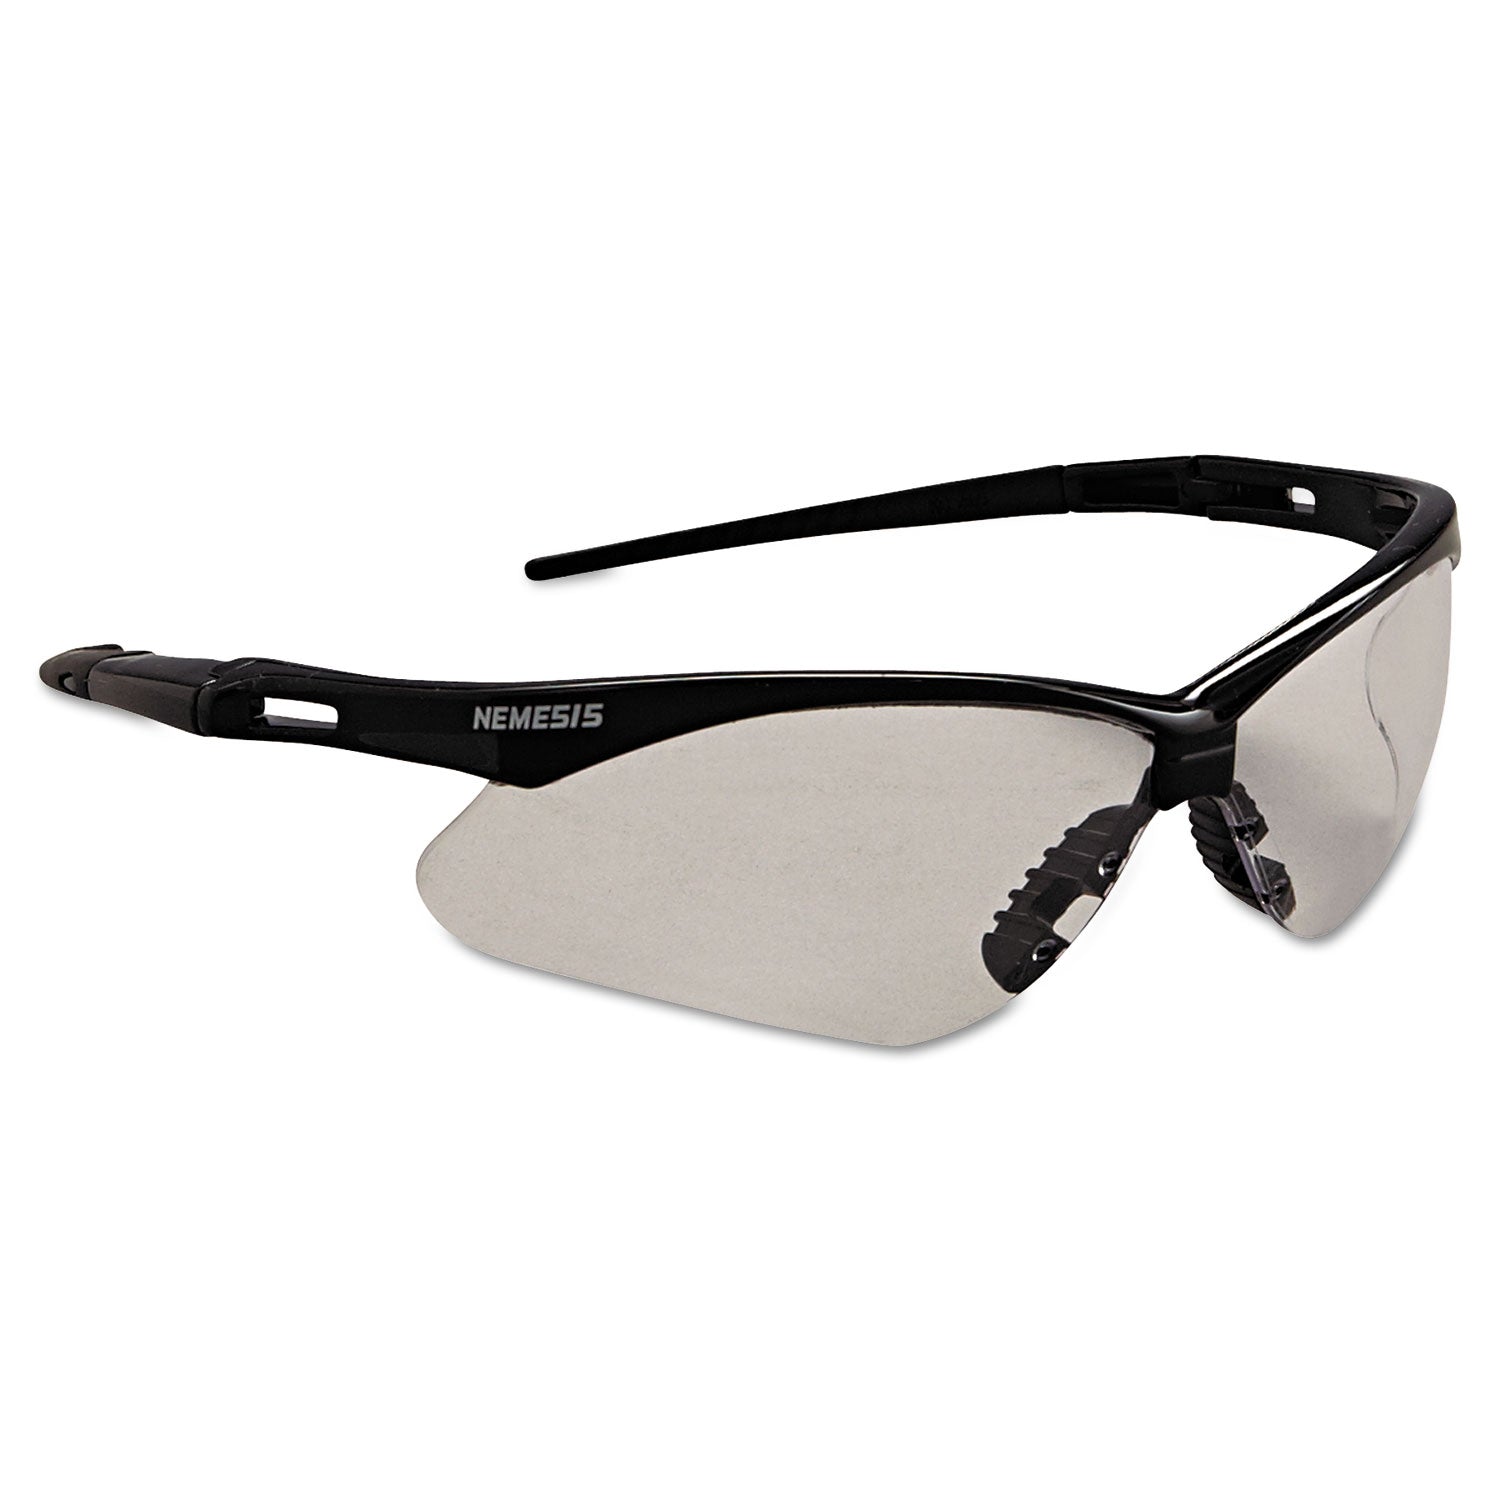 nemesis-safety-glasses-black-frame-clear-anti-fog-lens_kcc25679 - 2